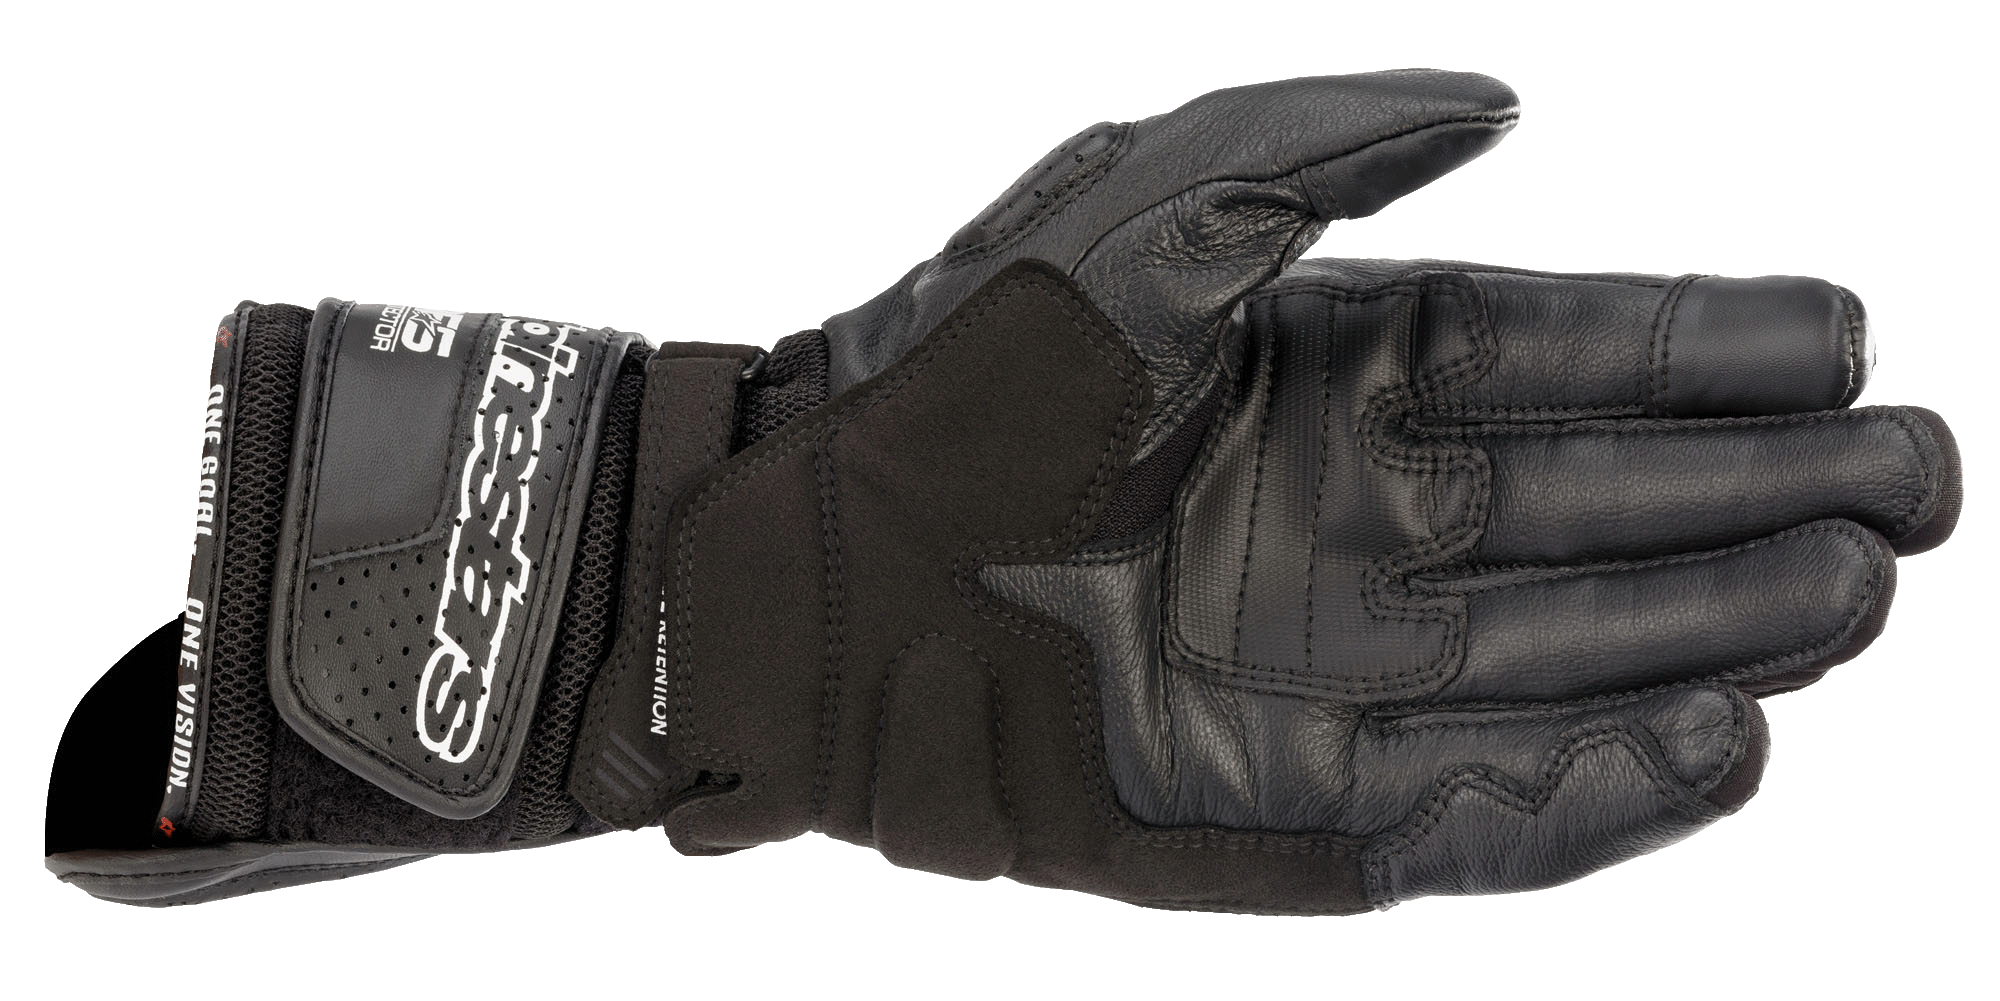 SP-8 V3 Air Gloves